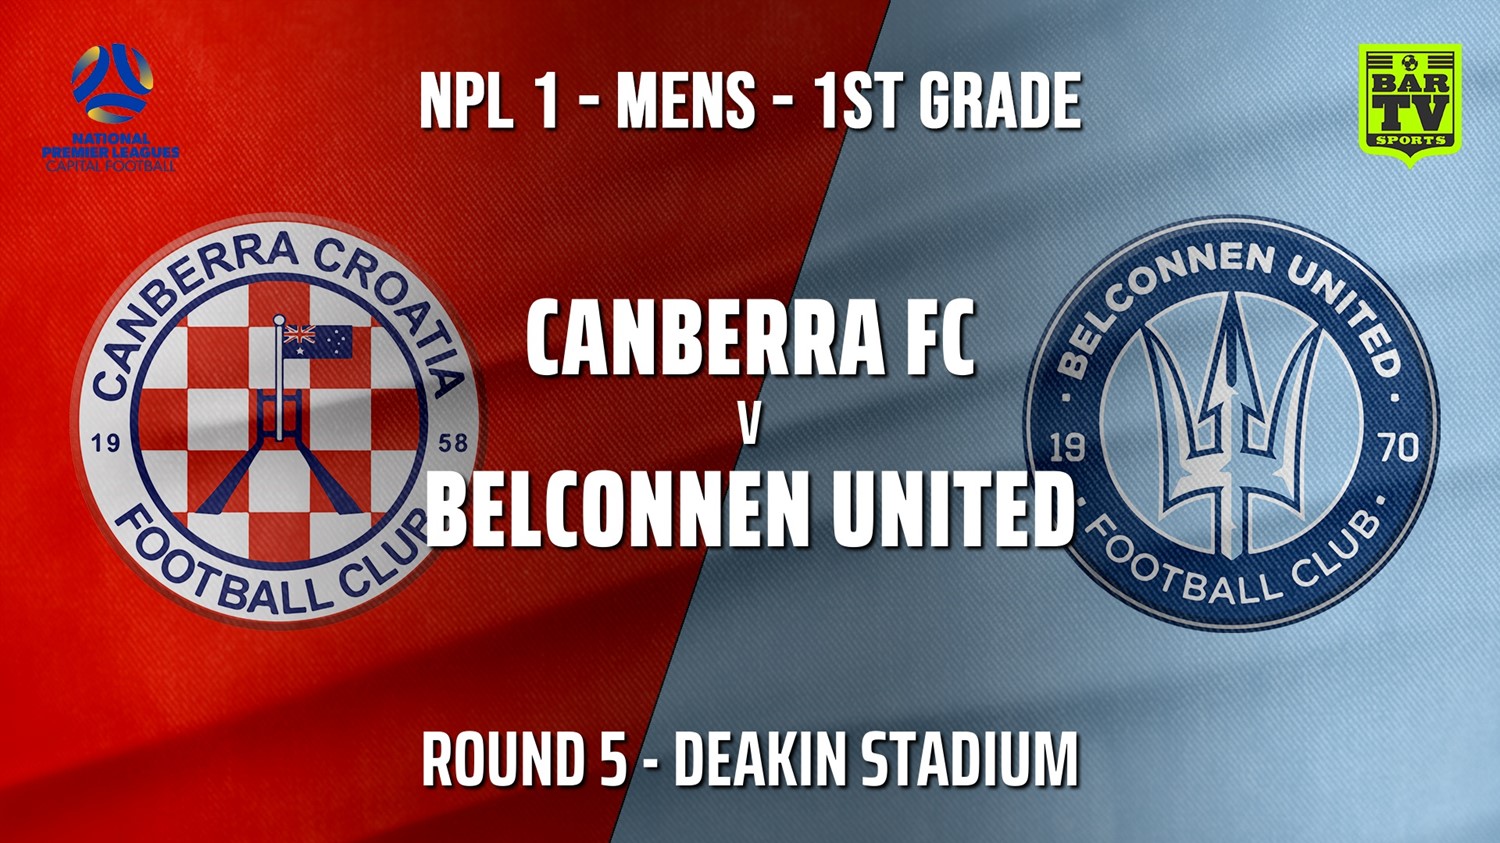 210509-NPL - CAPITAL Round 5 - Canberra FC v Belconnen United Minigame Slate Image